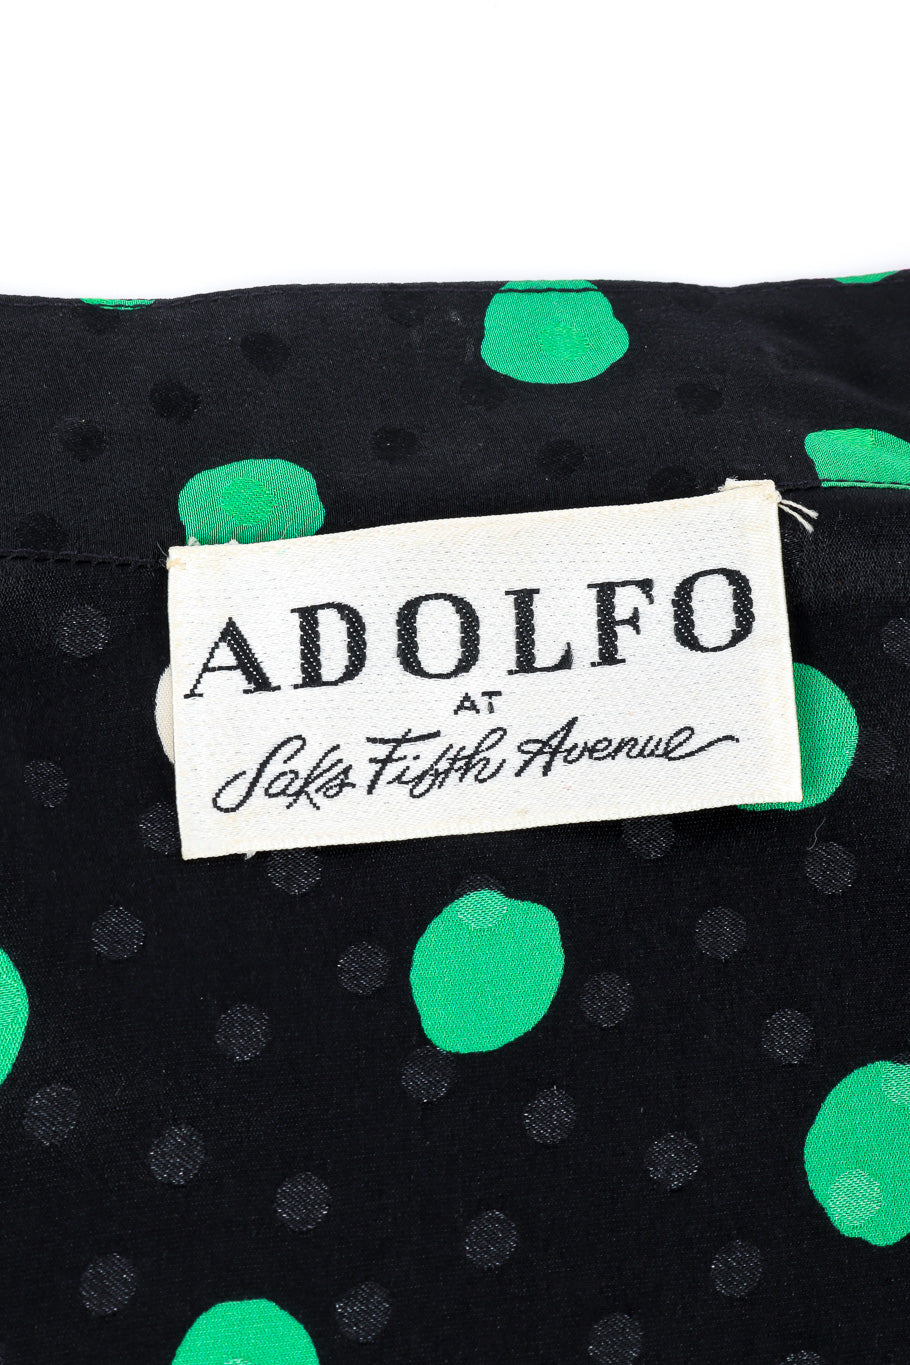 Adolfo polka dot silk blouse and skirt set blouse designer label @recessla